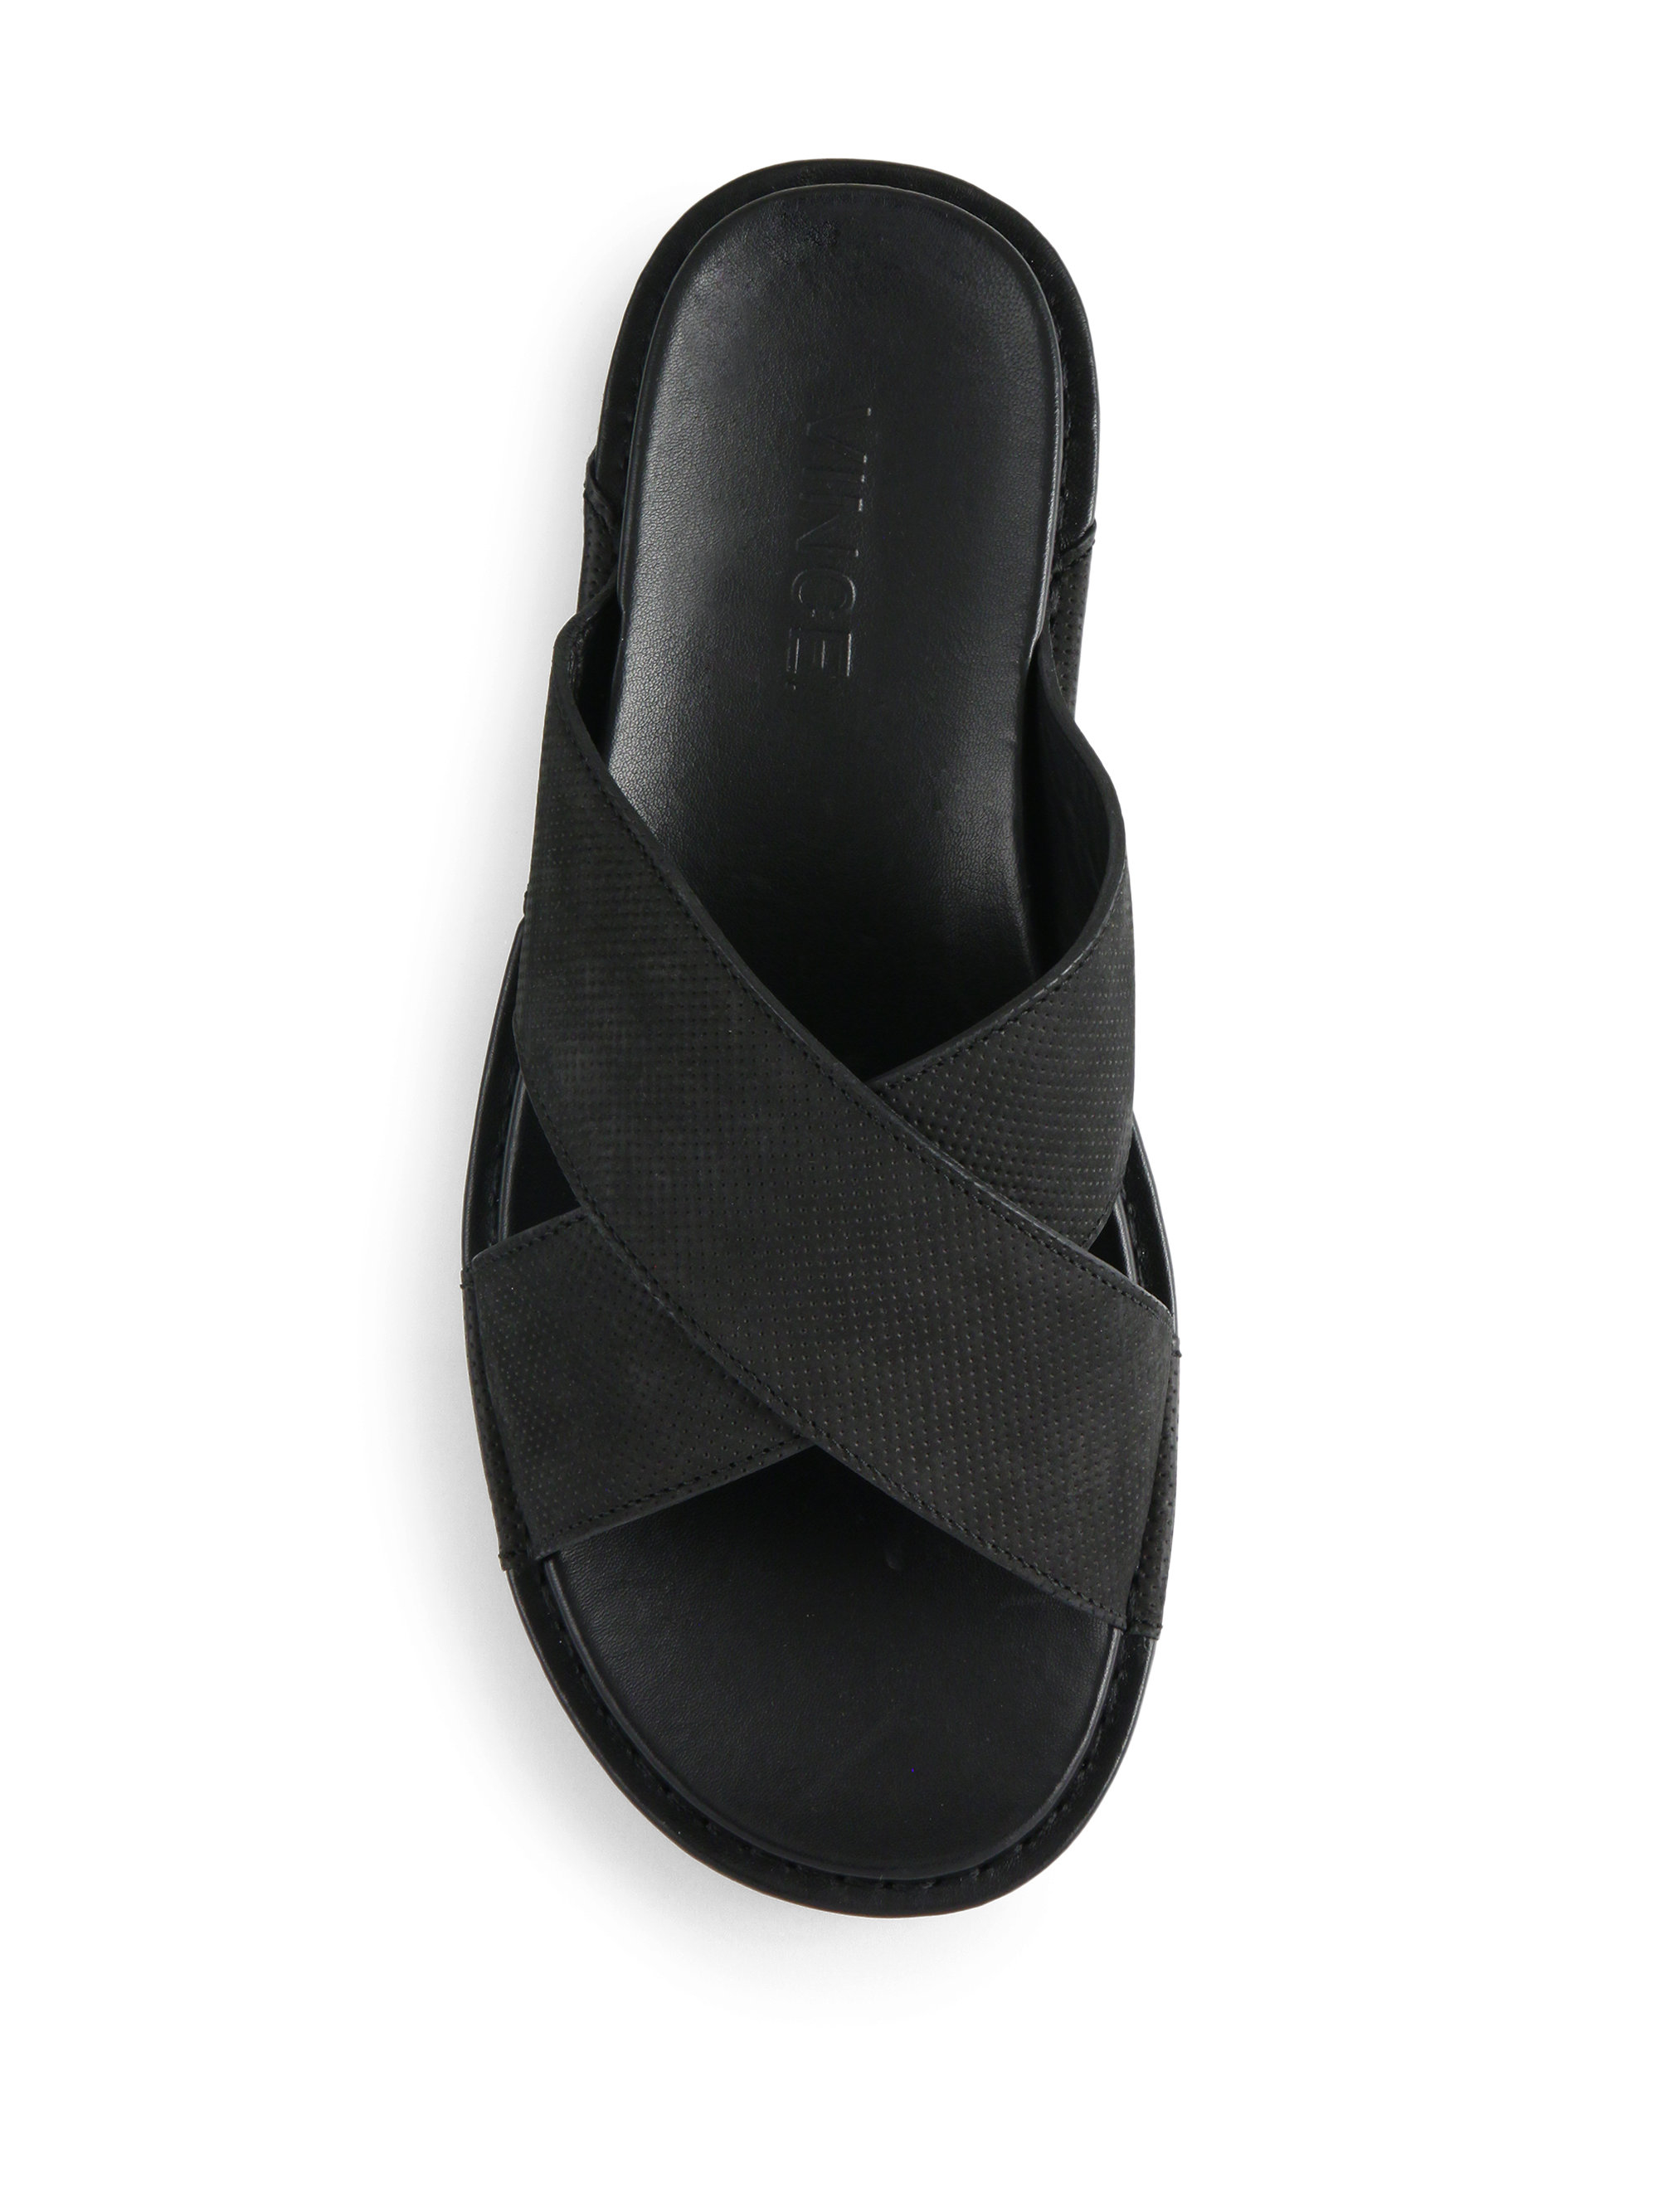 Lyst - Vince Weston Leather Crisscross Slide Sandals in Black for Men2000 x 2667